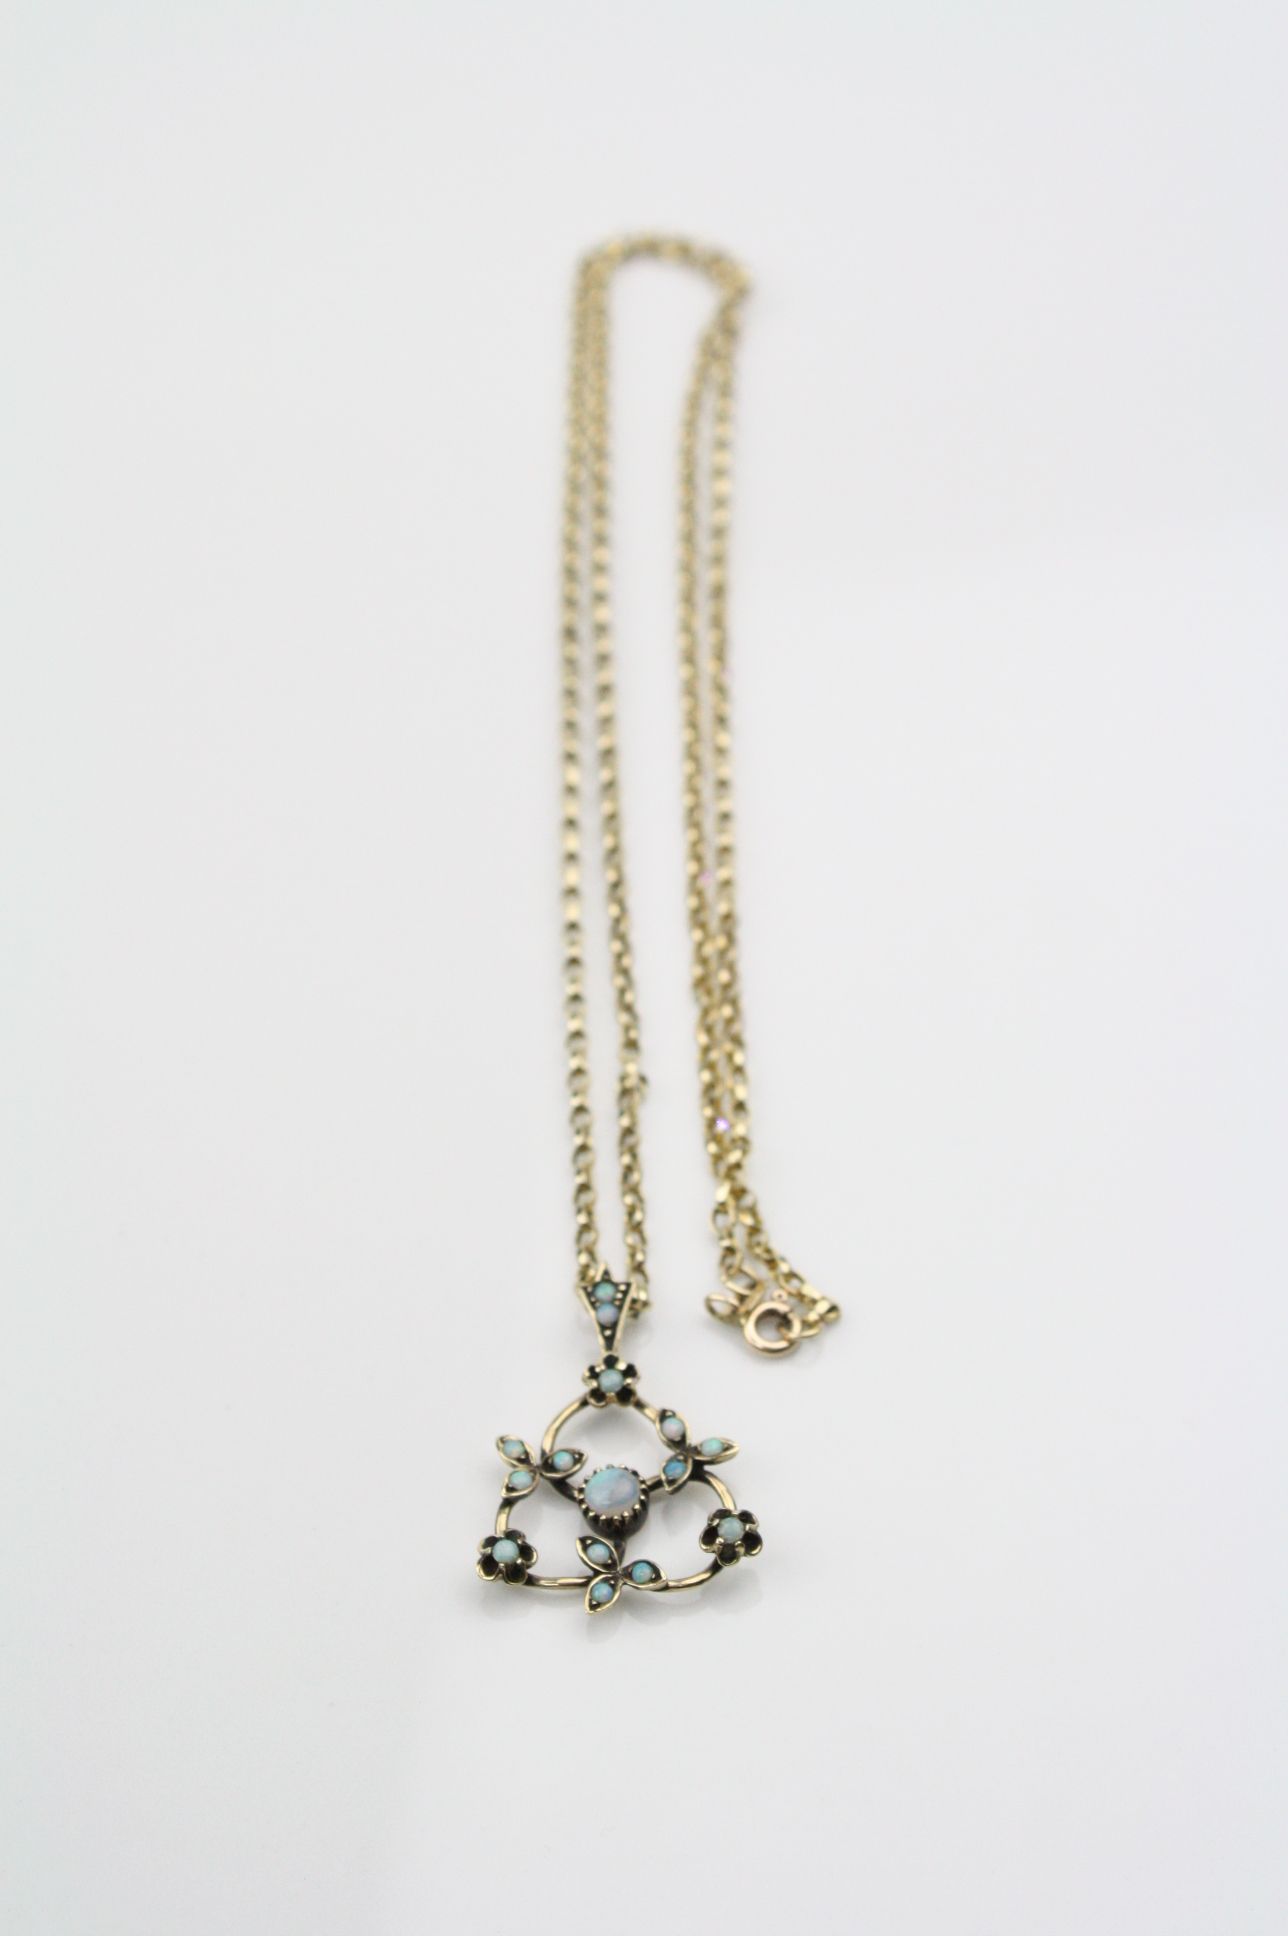 Opal 9ct yellow gold pendant necklace, the principle round cabochon cut precious white opal diameter